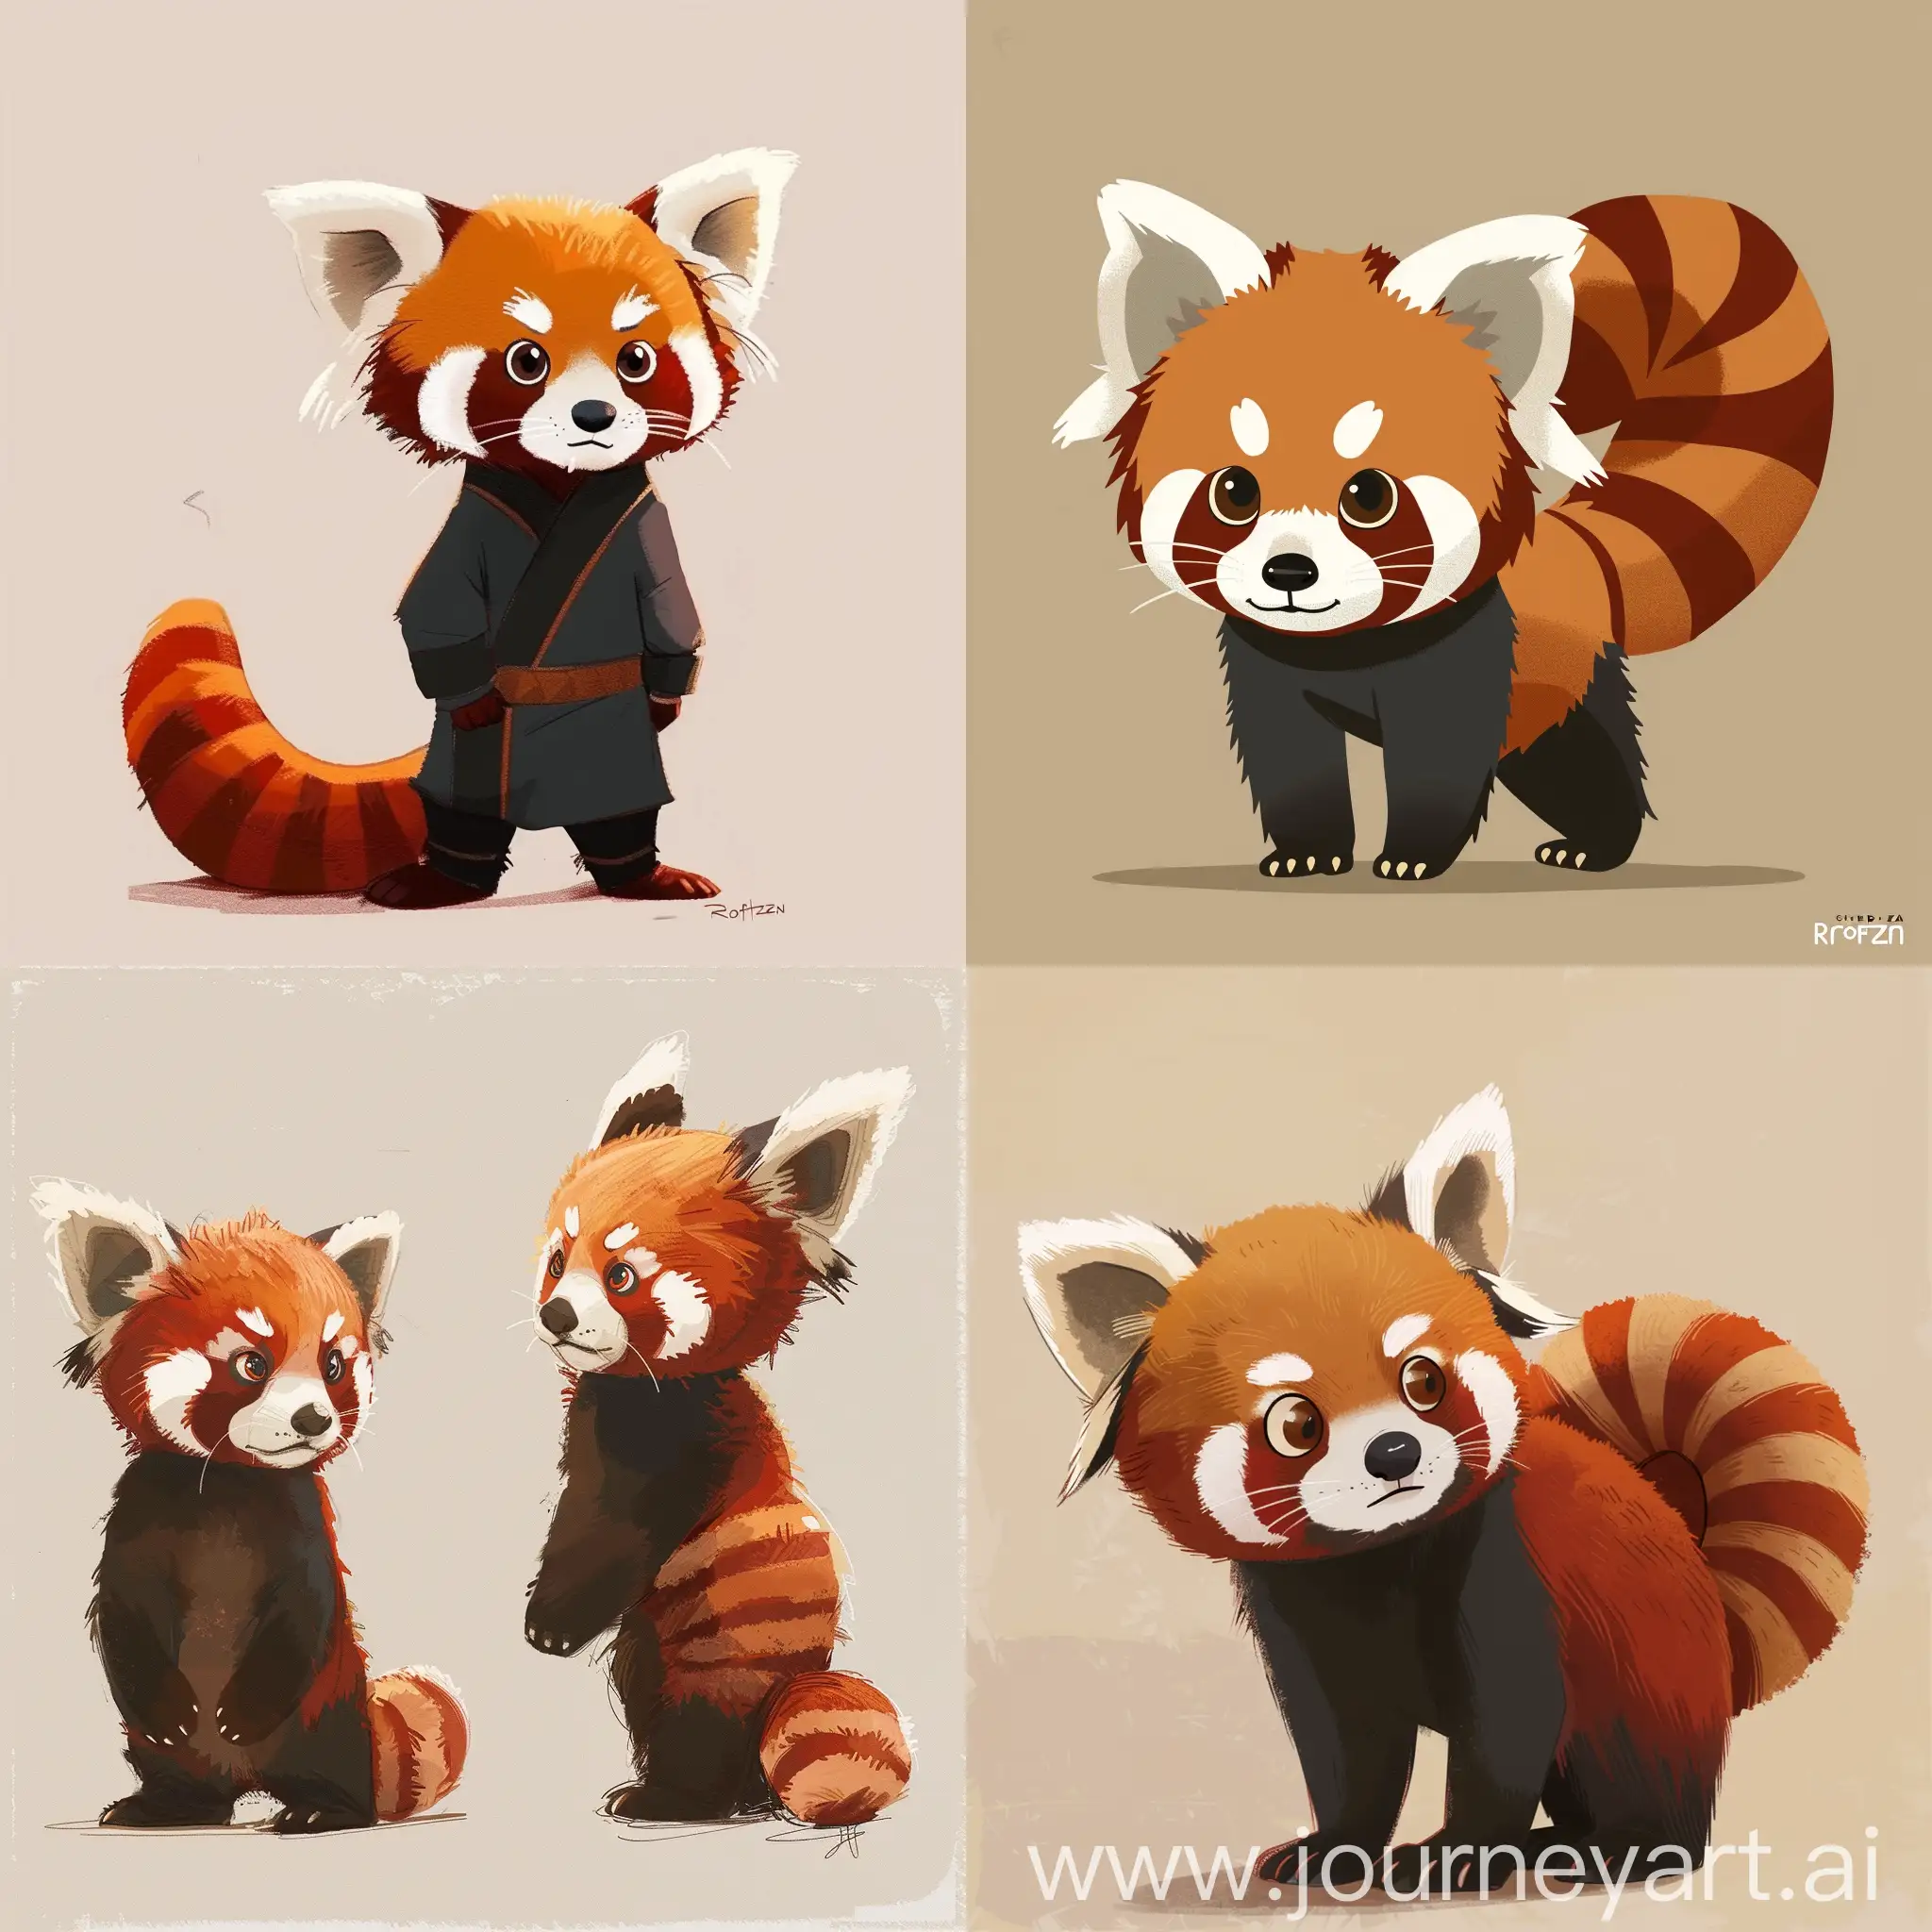 cute red panda  series，studio ghibli，minimalism，character design，exquisite details，character sheet Artist：roffzen